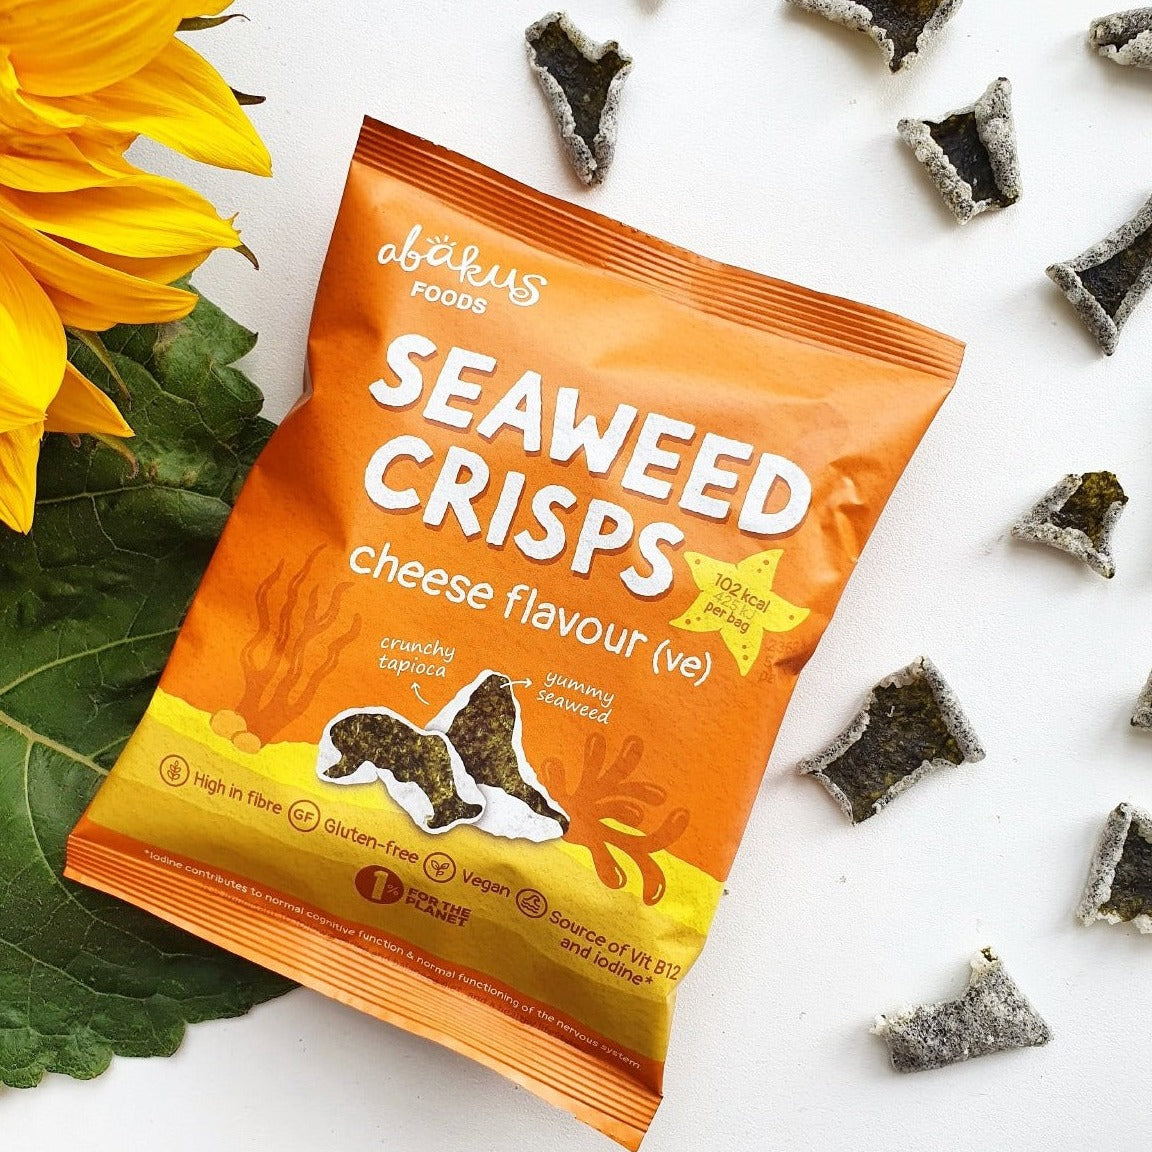 Abakus seaweed crisps a delicious vegan snack